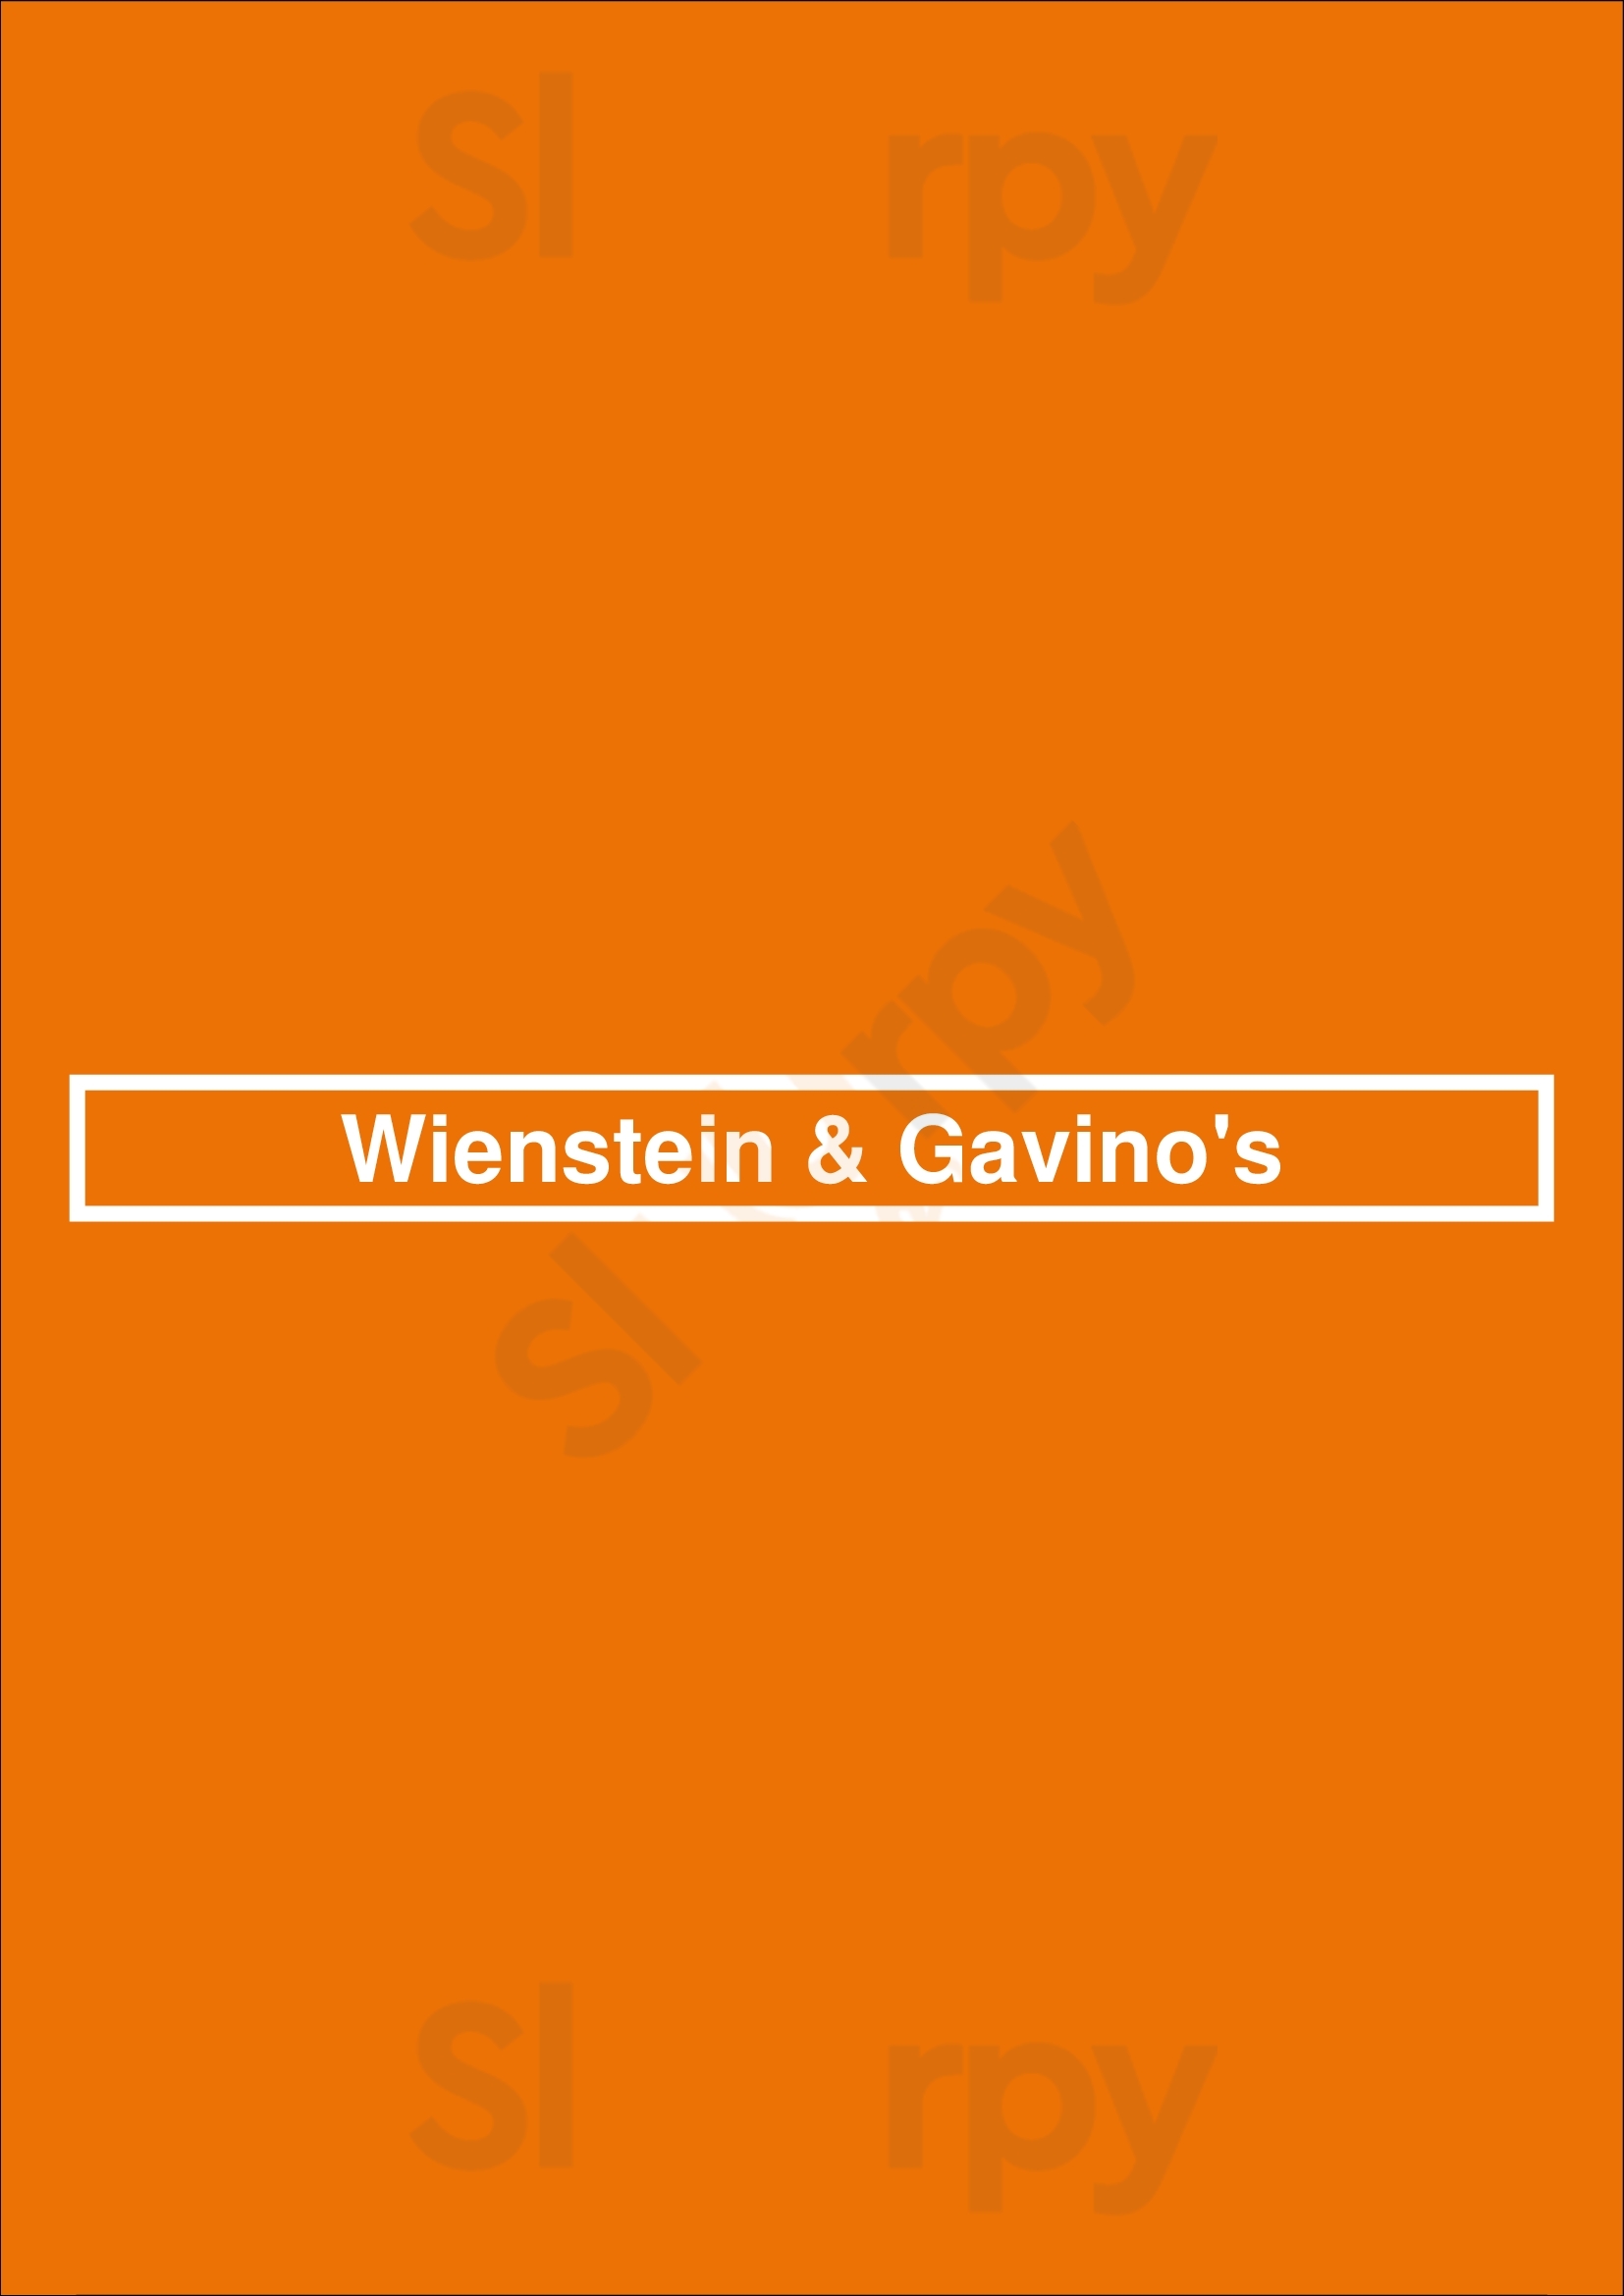 Wienstein & Gavino's Montreal Menu - 1